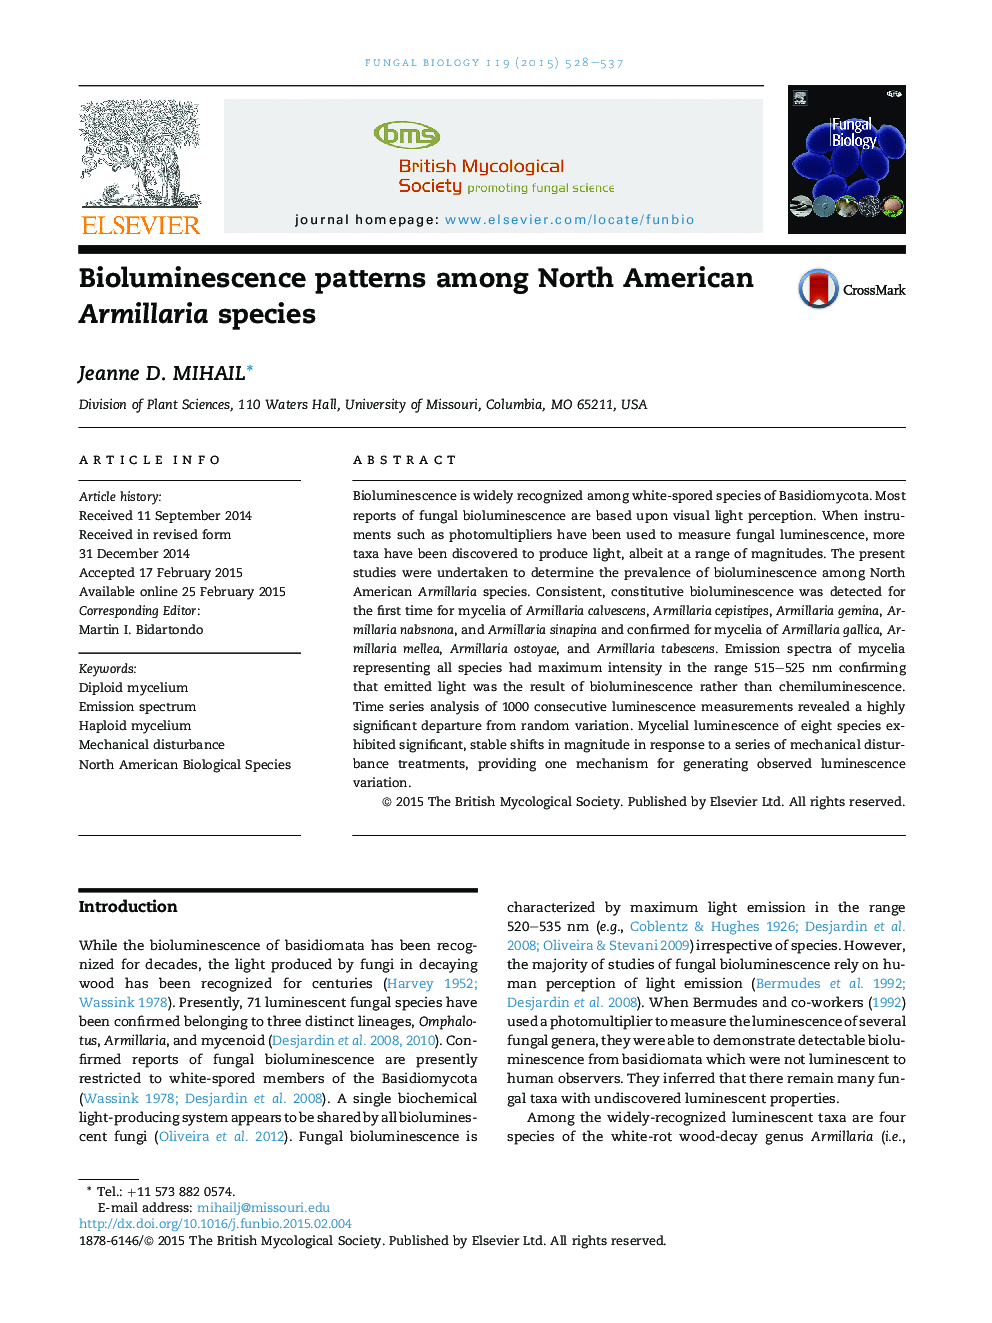 Bioluminescence patterns among North American Armillaria species